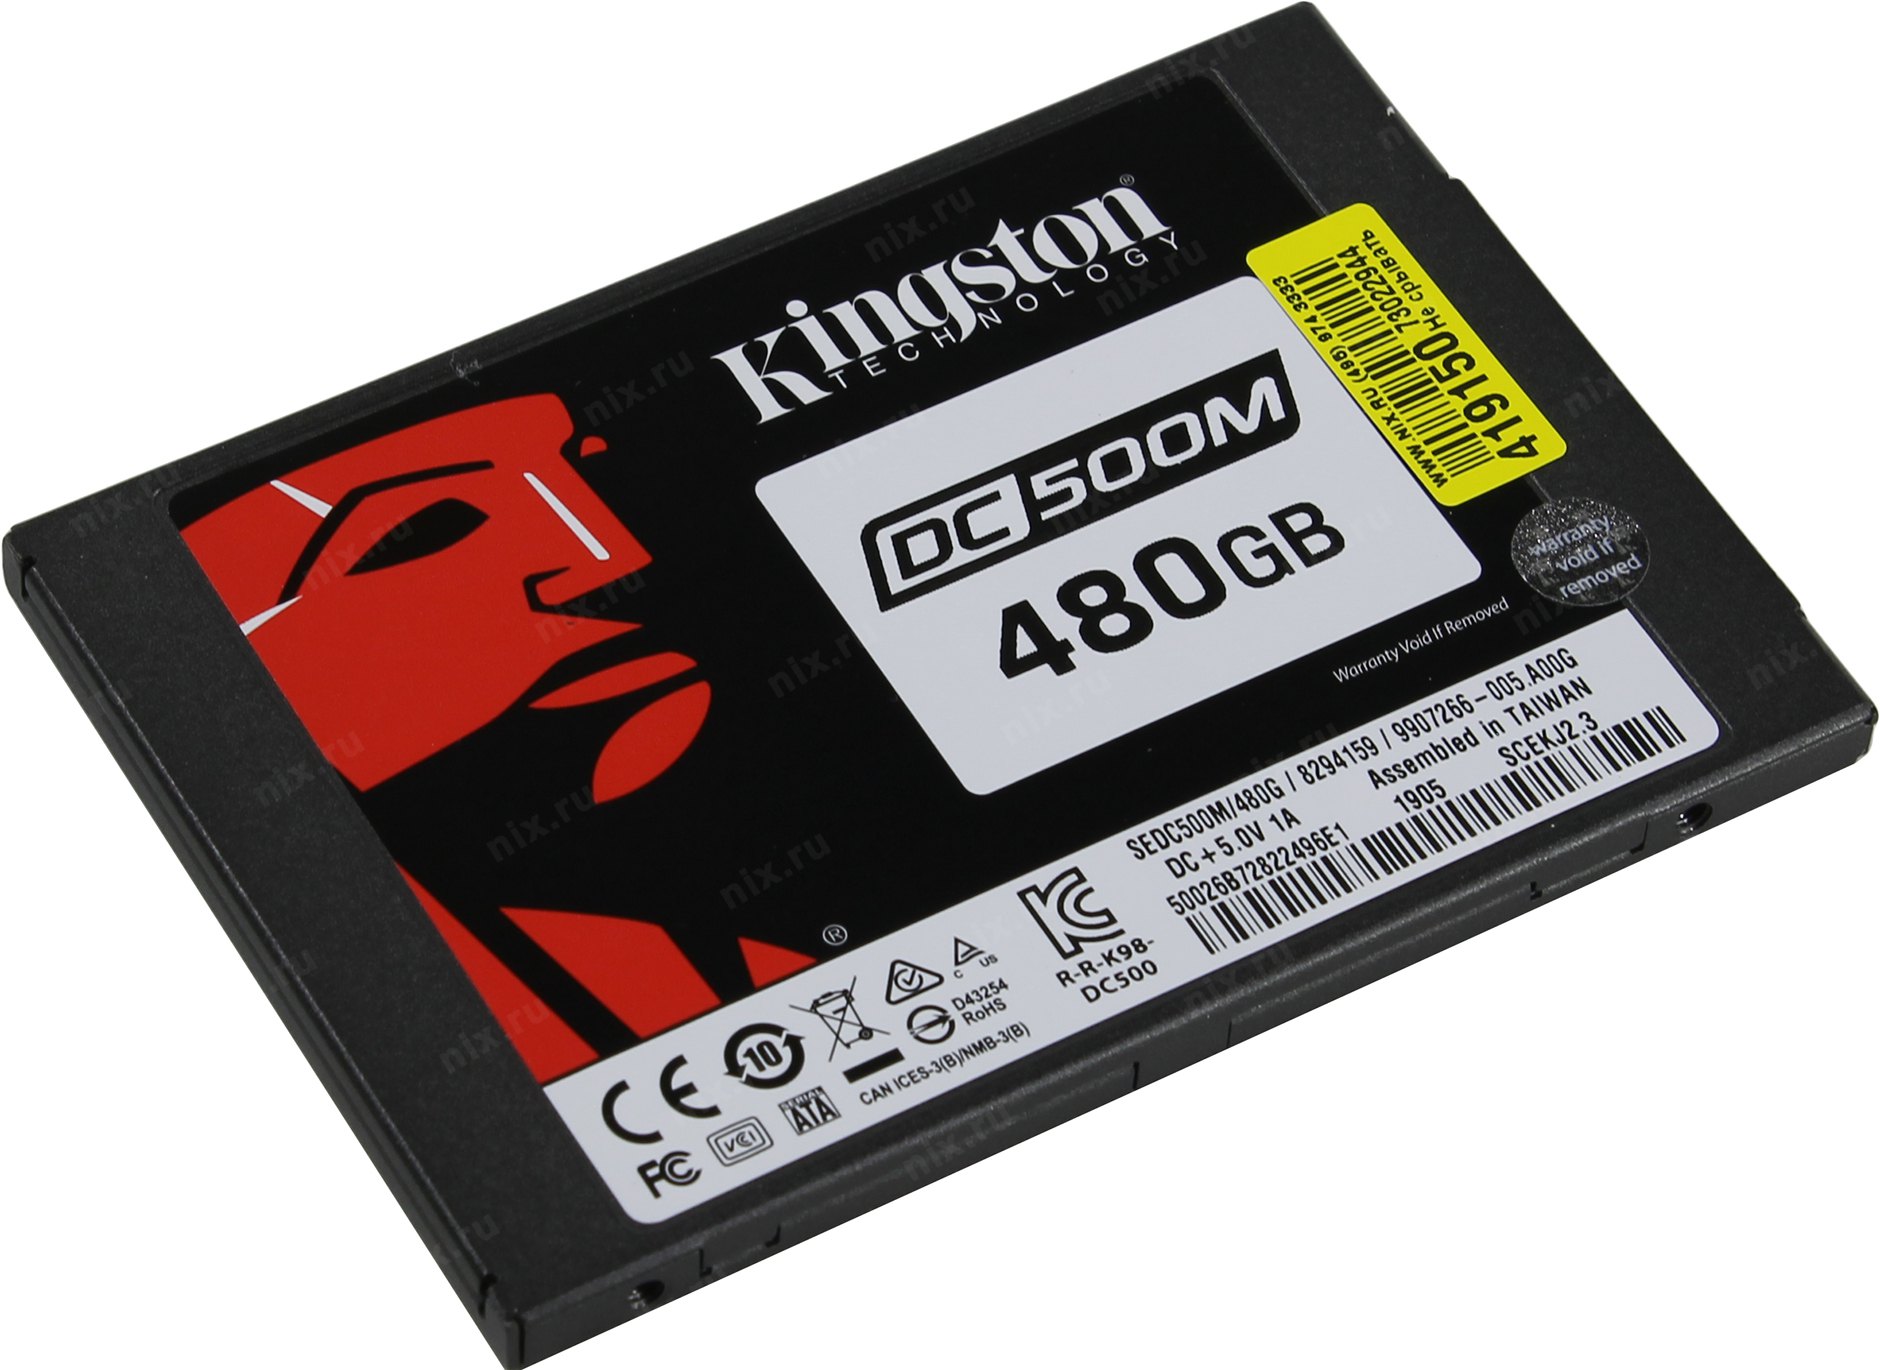 KINGSTON DC500M 480GB Enterprise SSD, 2.5” 7mm, SATA 6 Gb/s, Read/Write: 555 / 520 MB/s, Random Read/Write IOPS 98K/58K